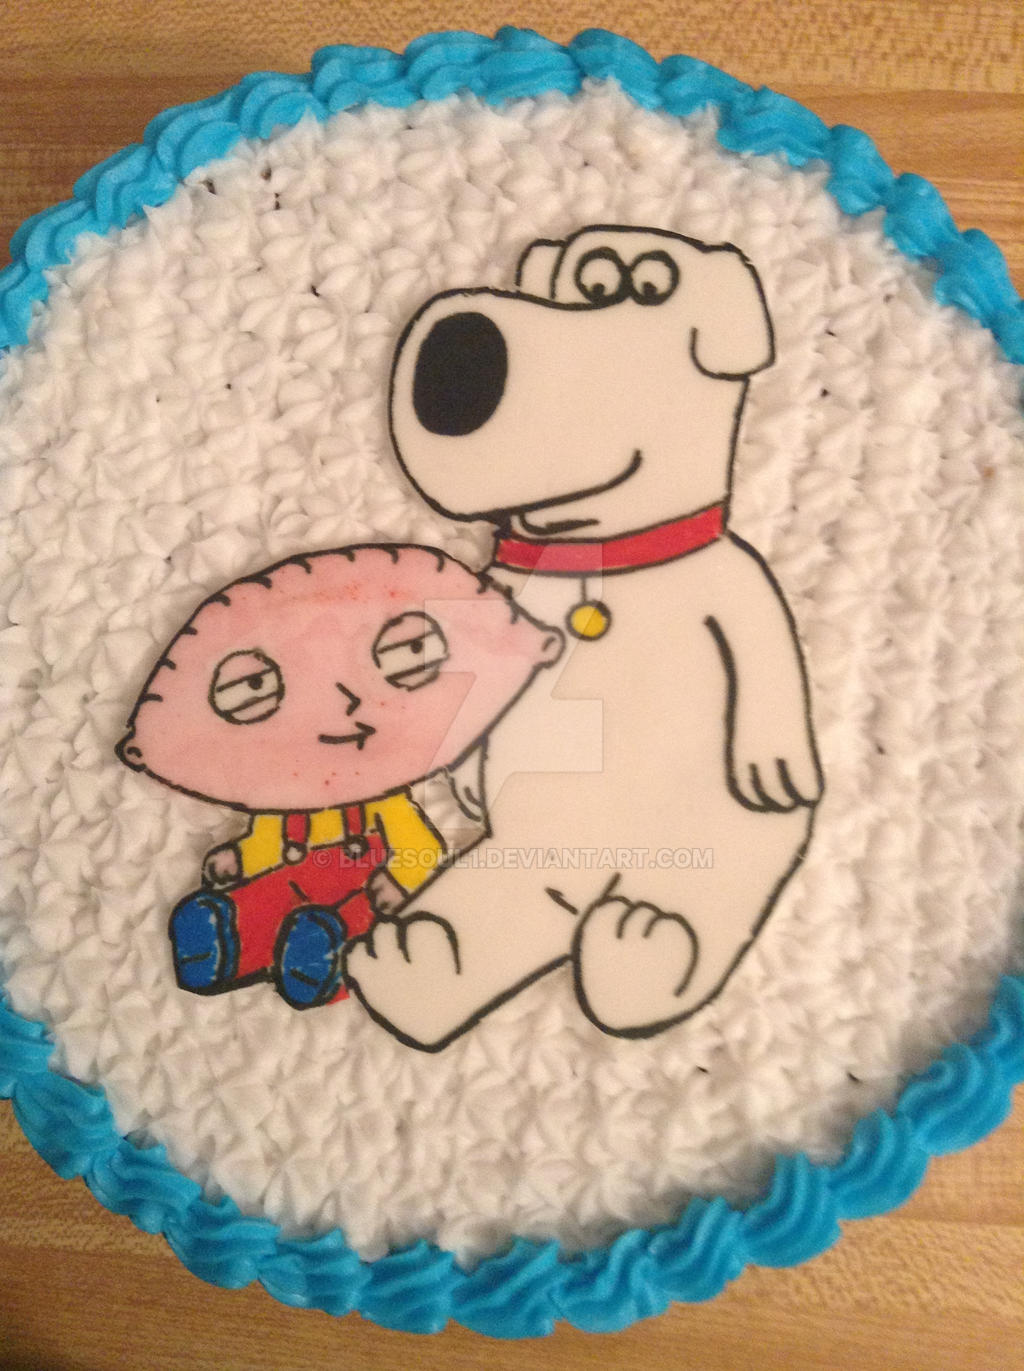 Family Guy cake by Bluesoul1 on DeviantArt